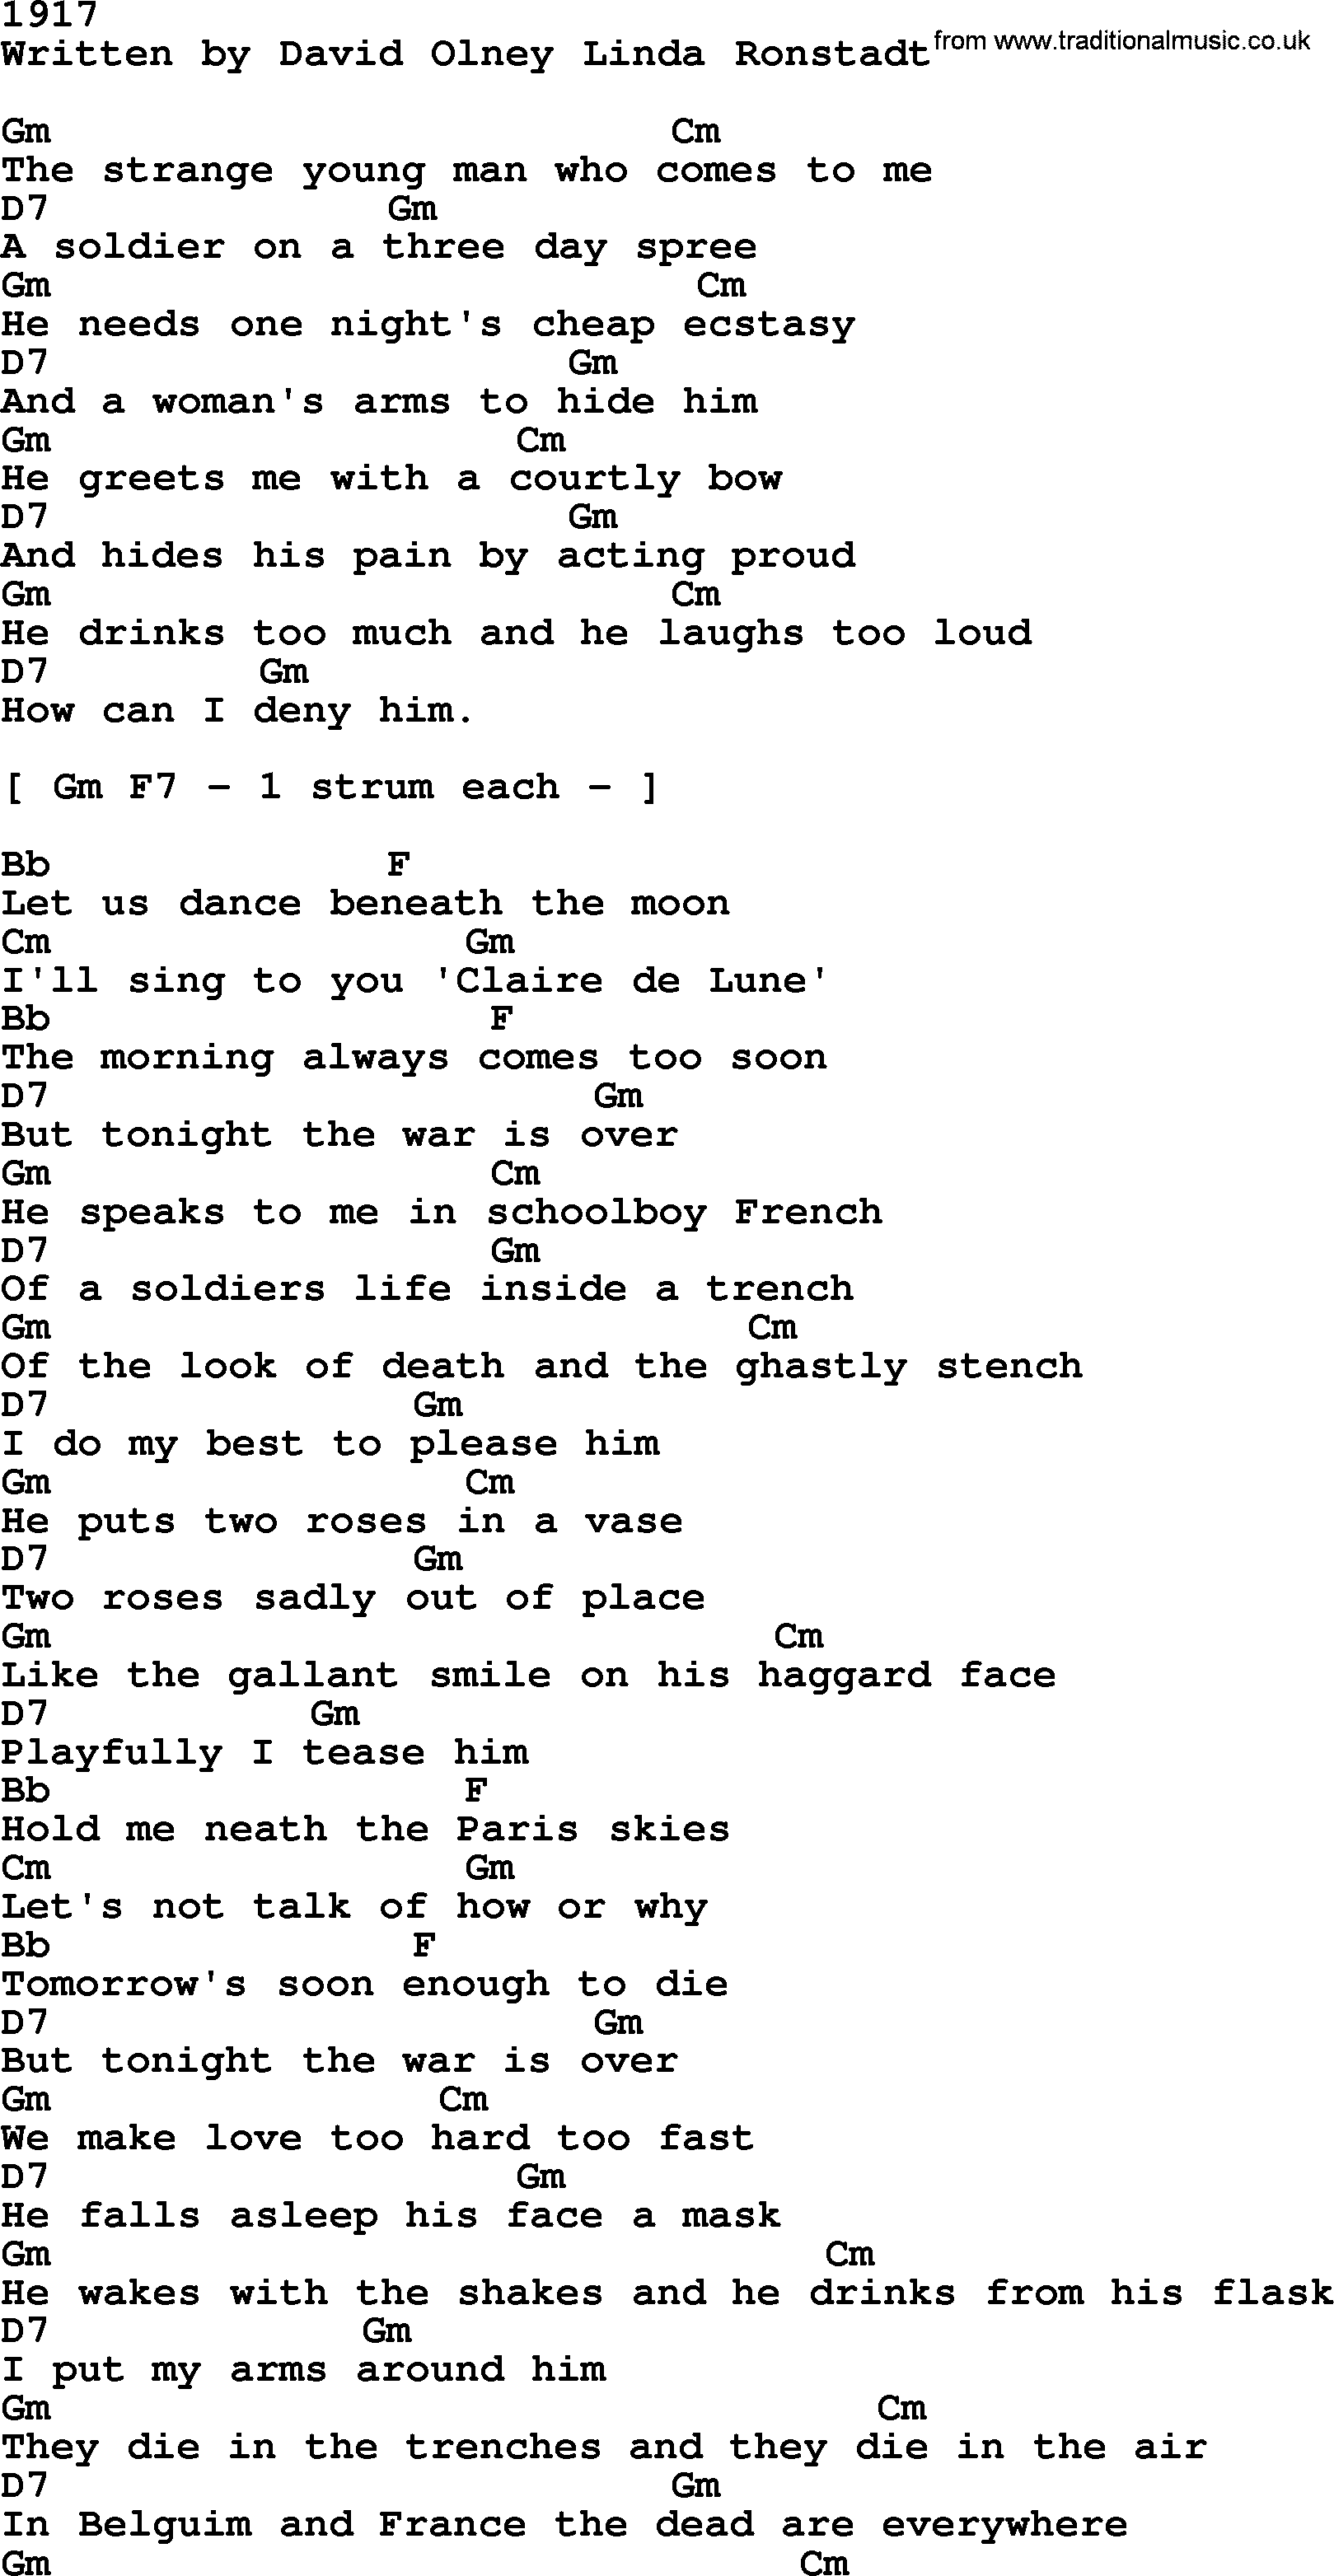 Emmylou Harris song: 1917 lyrics and chords